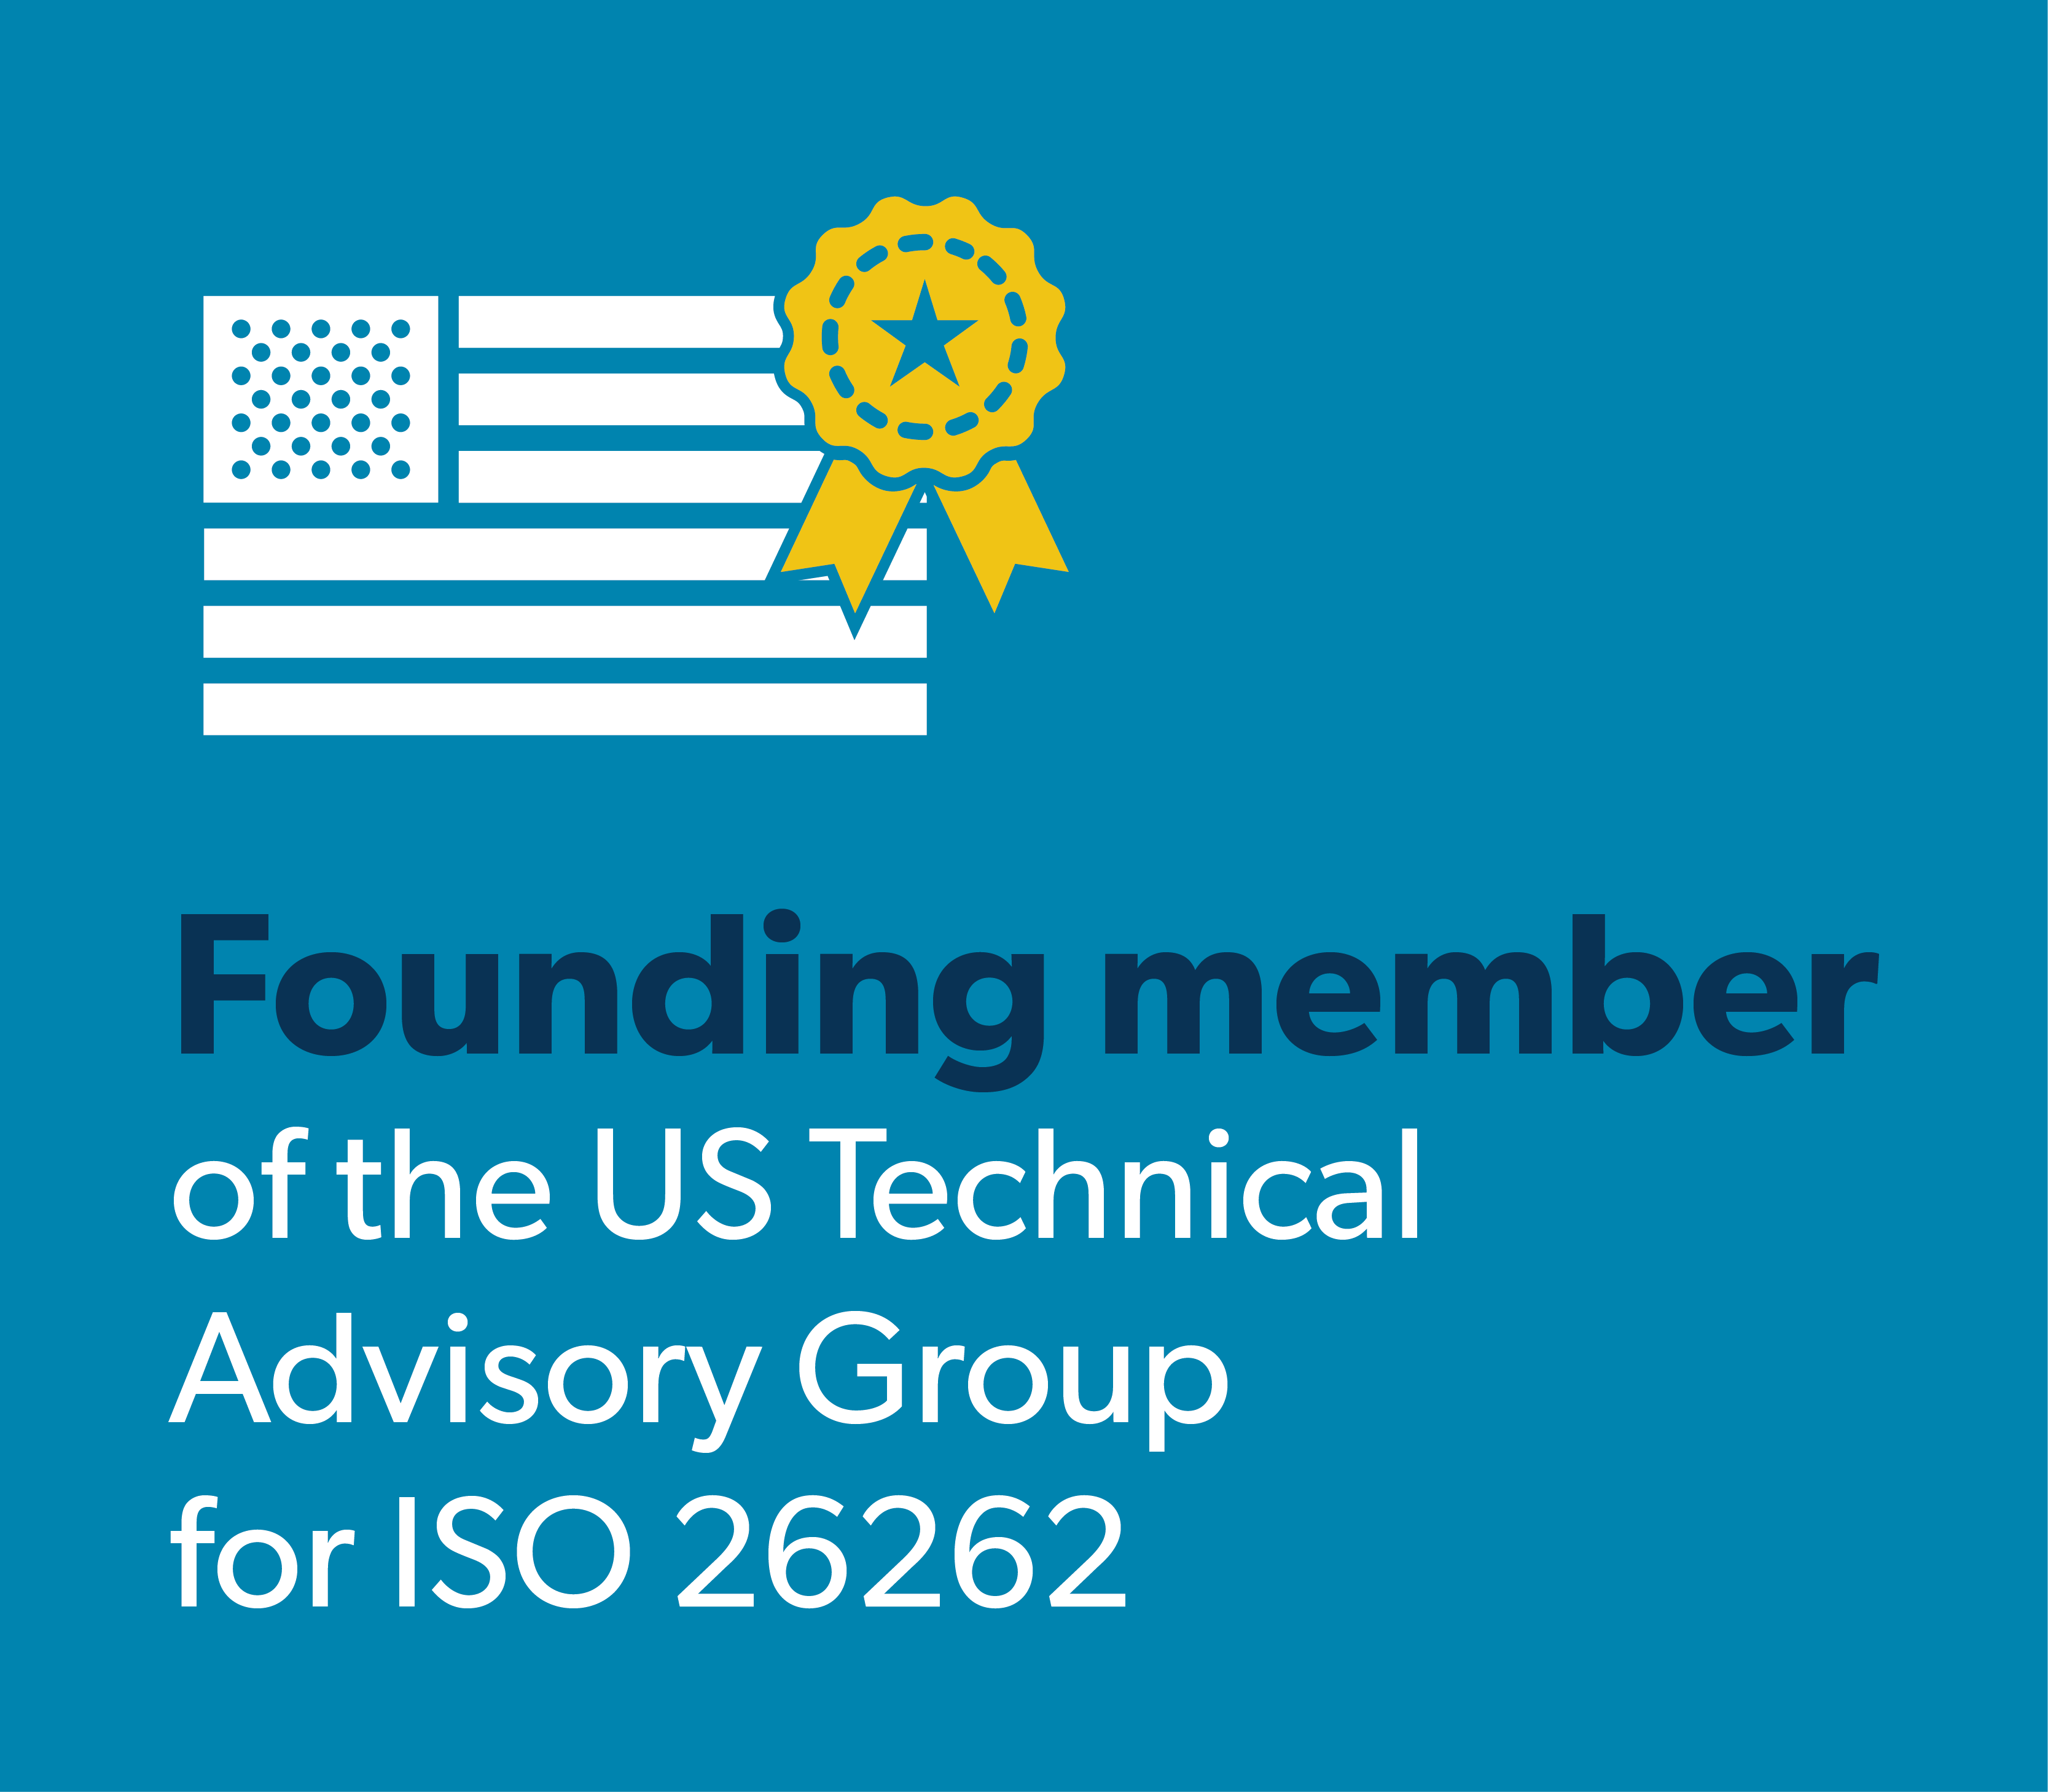 Founding member of the US Technical Advisory Group for ISO 26262